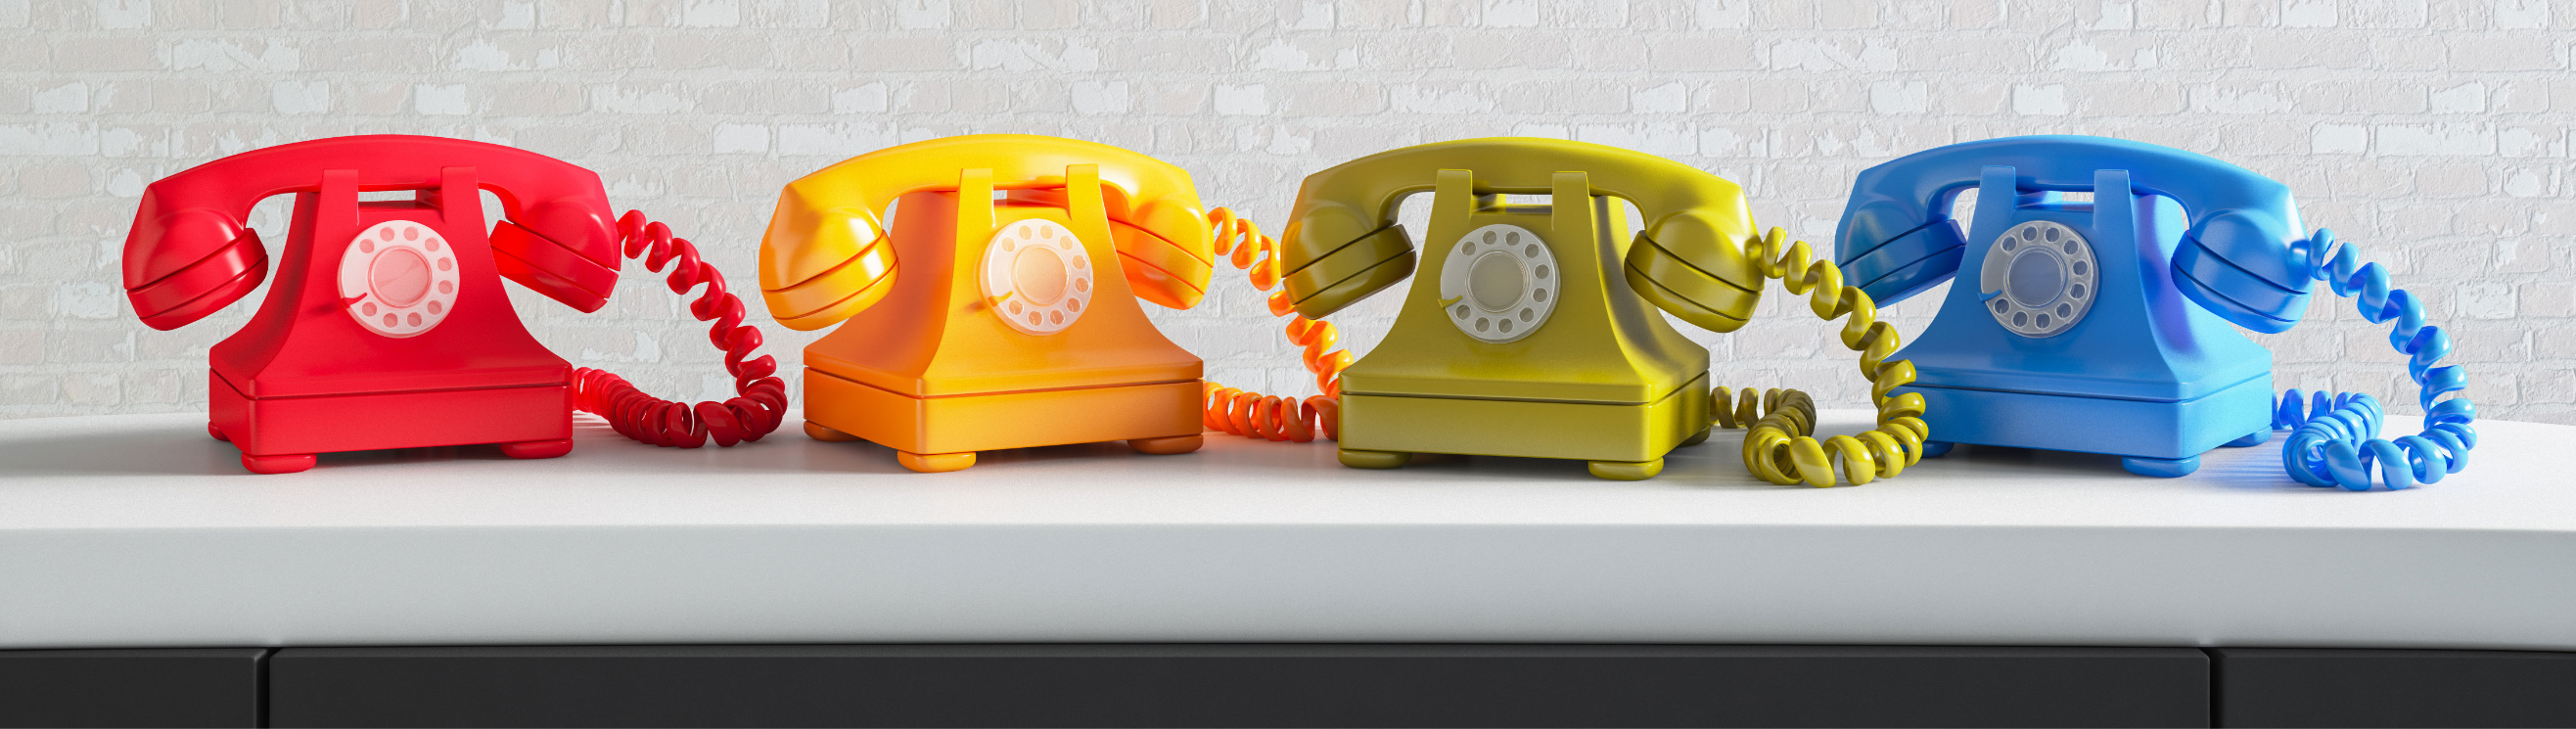 Colourful telephones